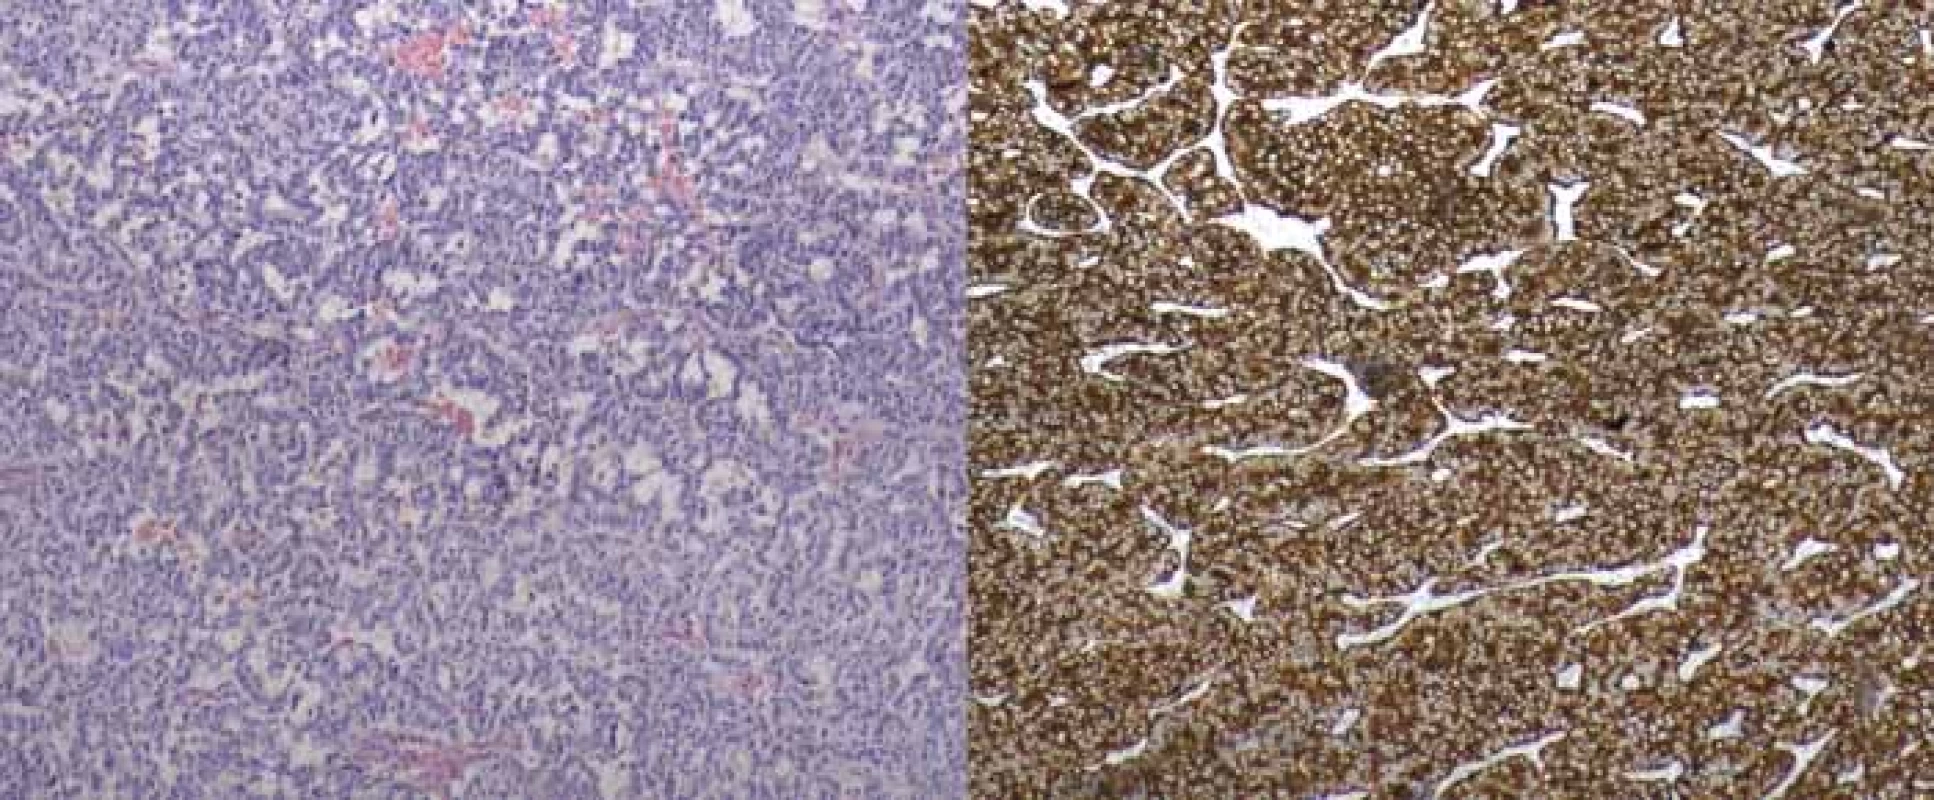 Histologický obraz gatrinomu kaudy pankreatu (WHO 2010 grade 2), vpravo imunohistochemické barvení.<br>
Fig. 4. Histological picture of gastrinoma of pancreatic tail (WHO 2010 grade 2), imunohistochemical staining on the right.